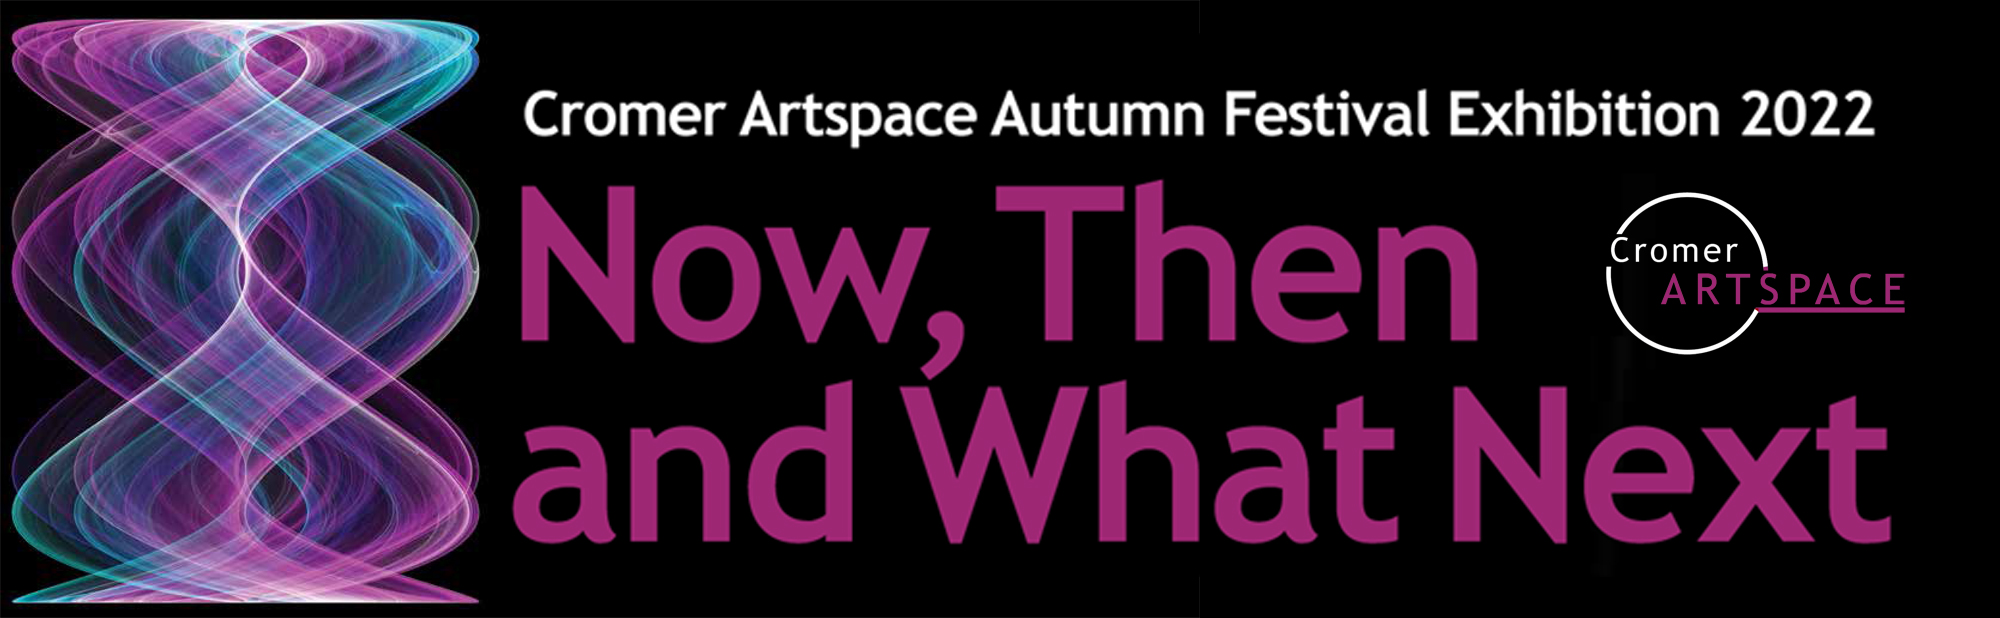 Cromer Artspace Autumn Festival